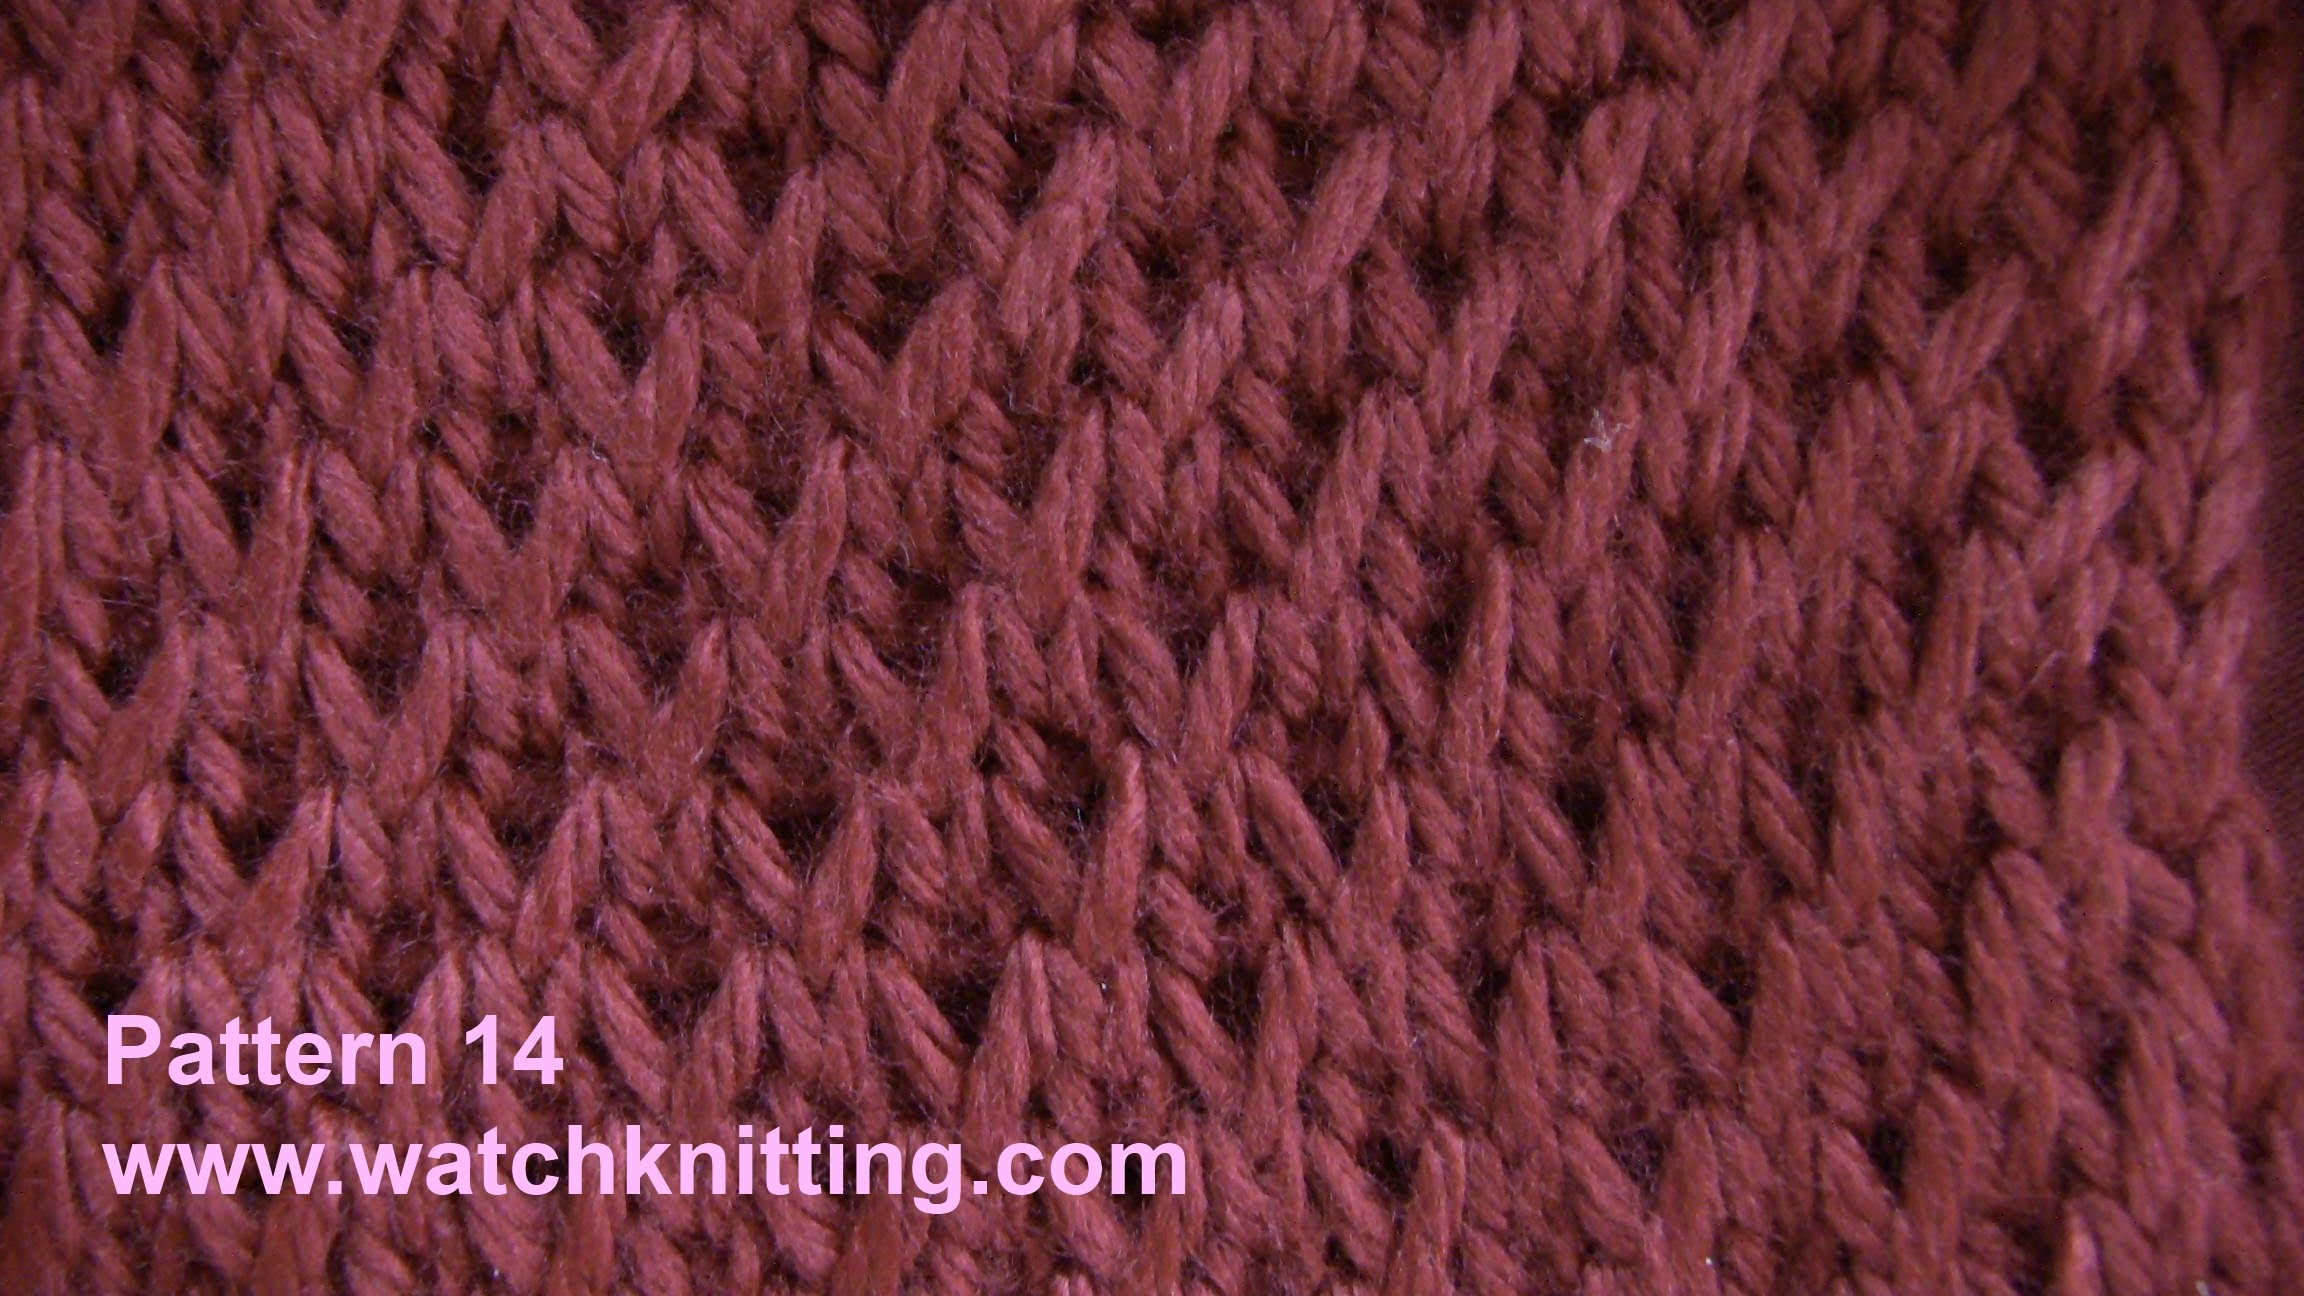 Knitting Patterns Tutorial Knit Patterns Simple Patterns Free Knitting Patterns Crochet And